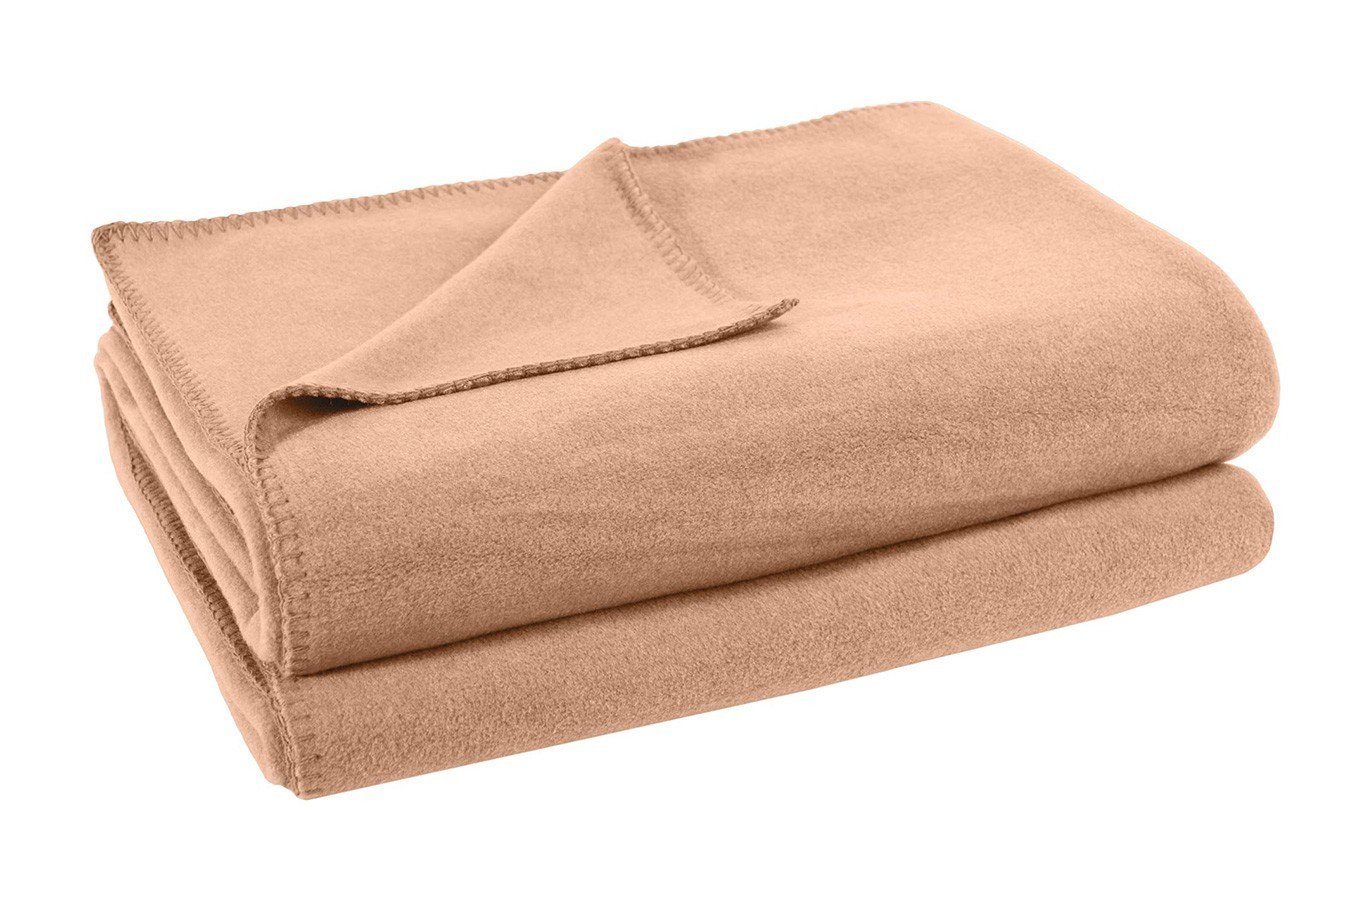 Wohndecke Soft-Fleece Decke 110 x 150 cm sand, daslagerhaus living